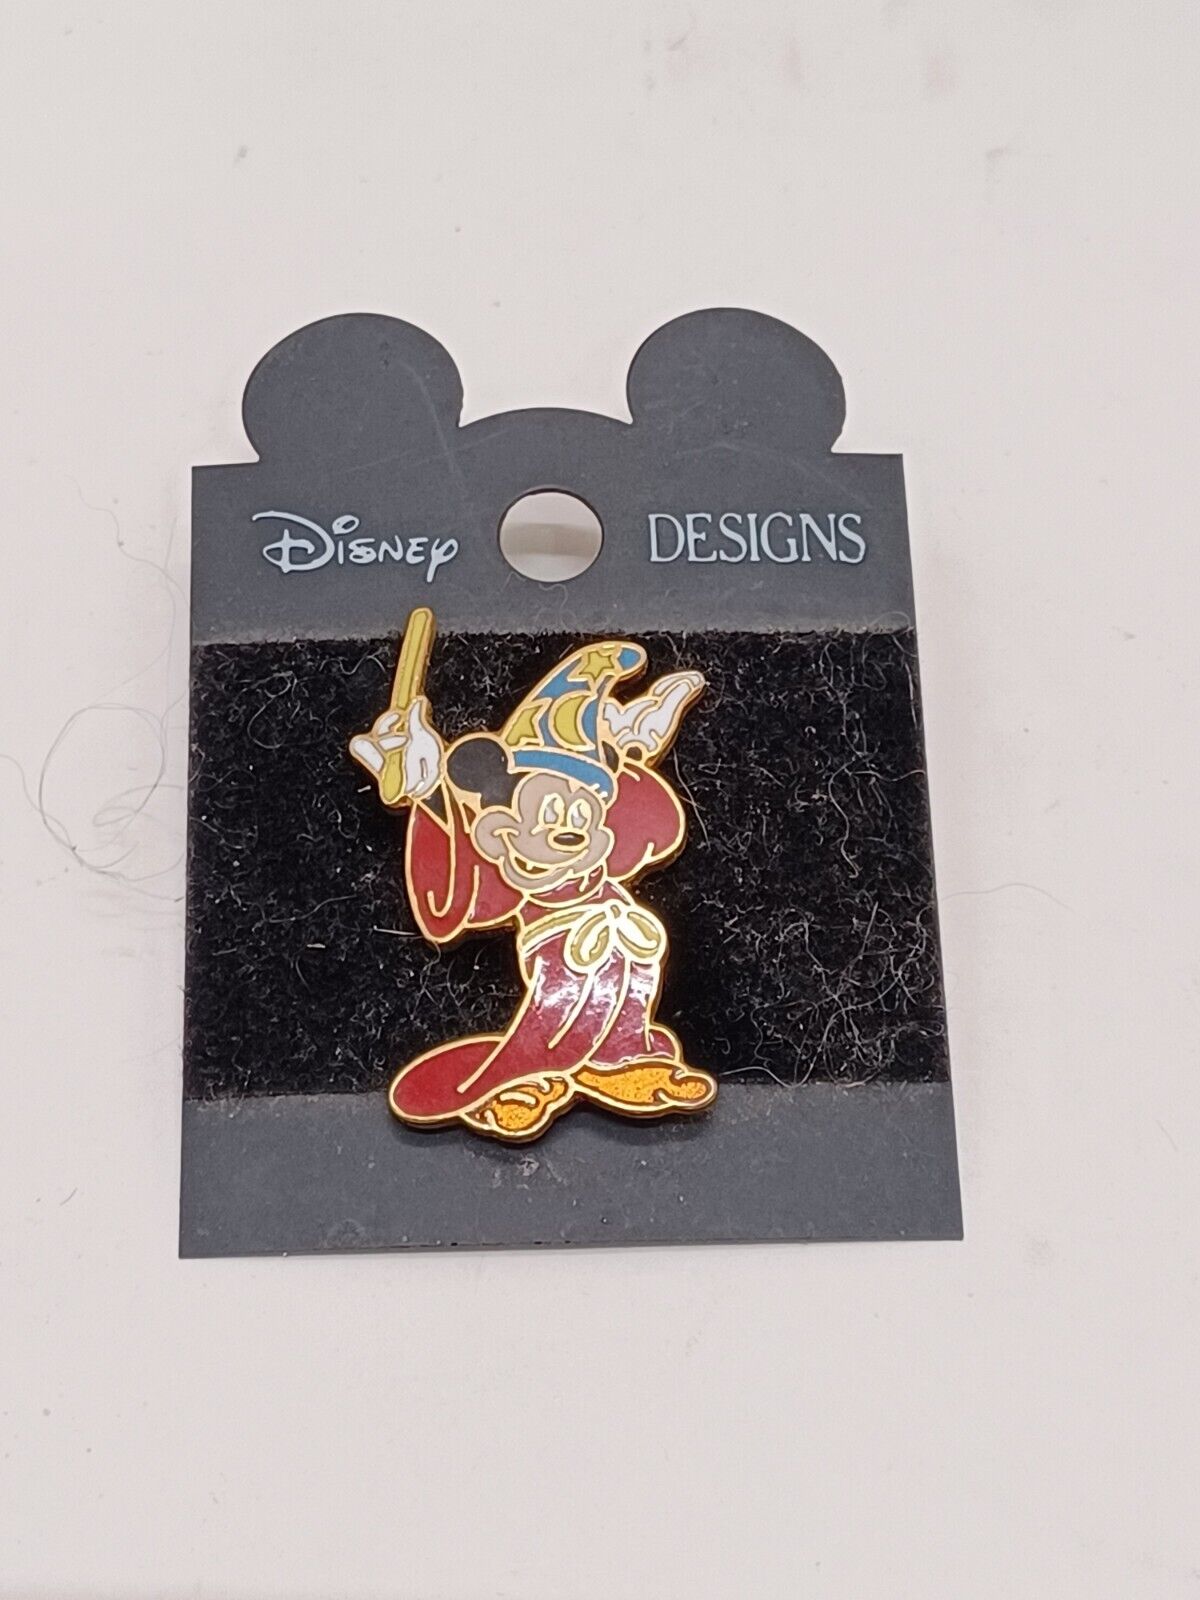 Disney Designs Mickey Mouse Fantasia Pin I2